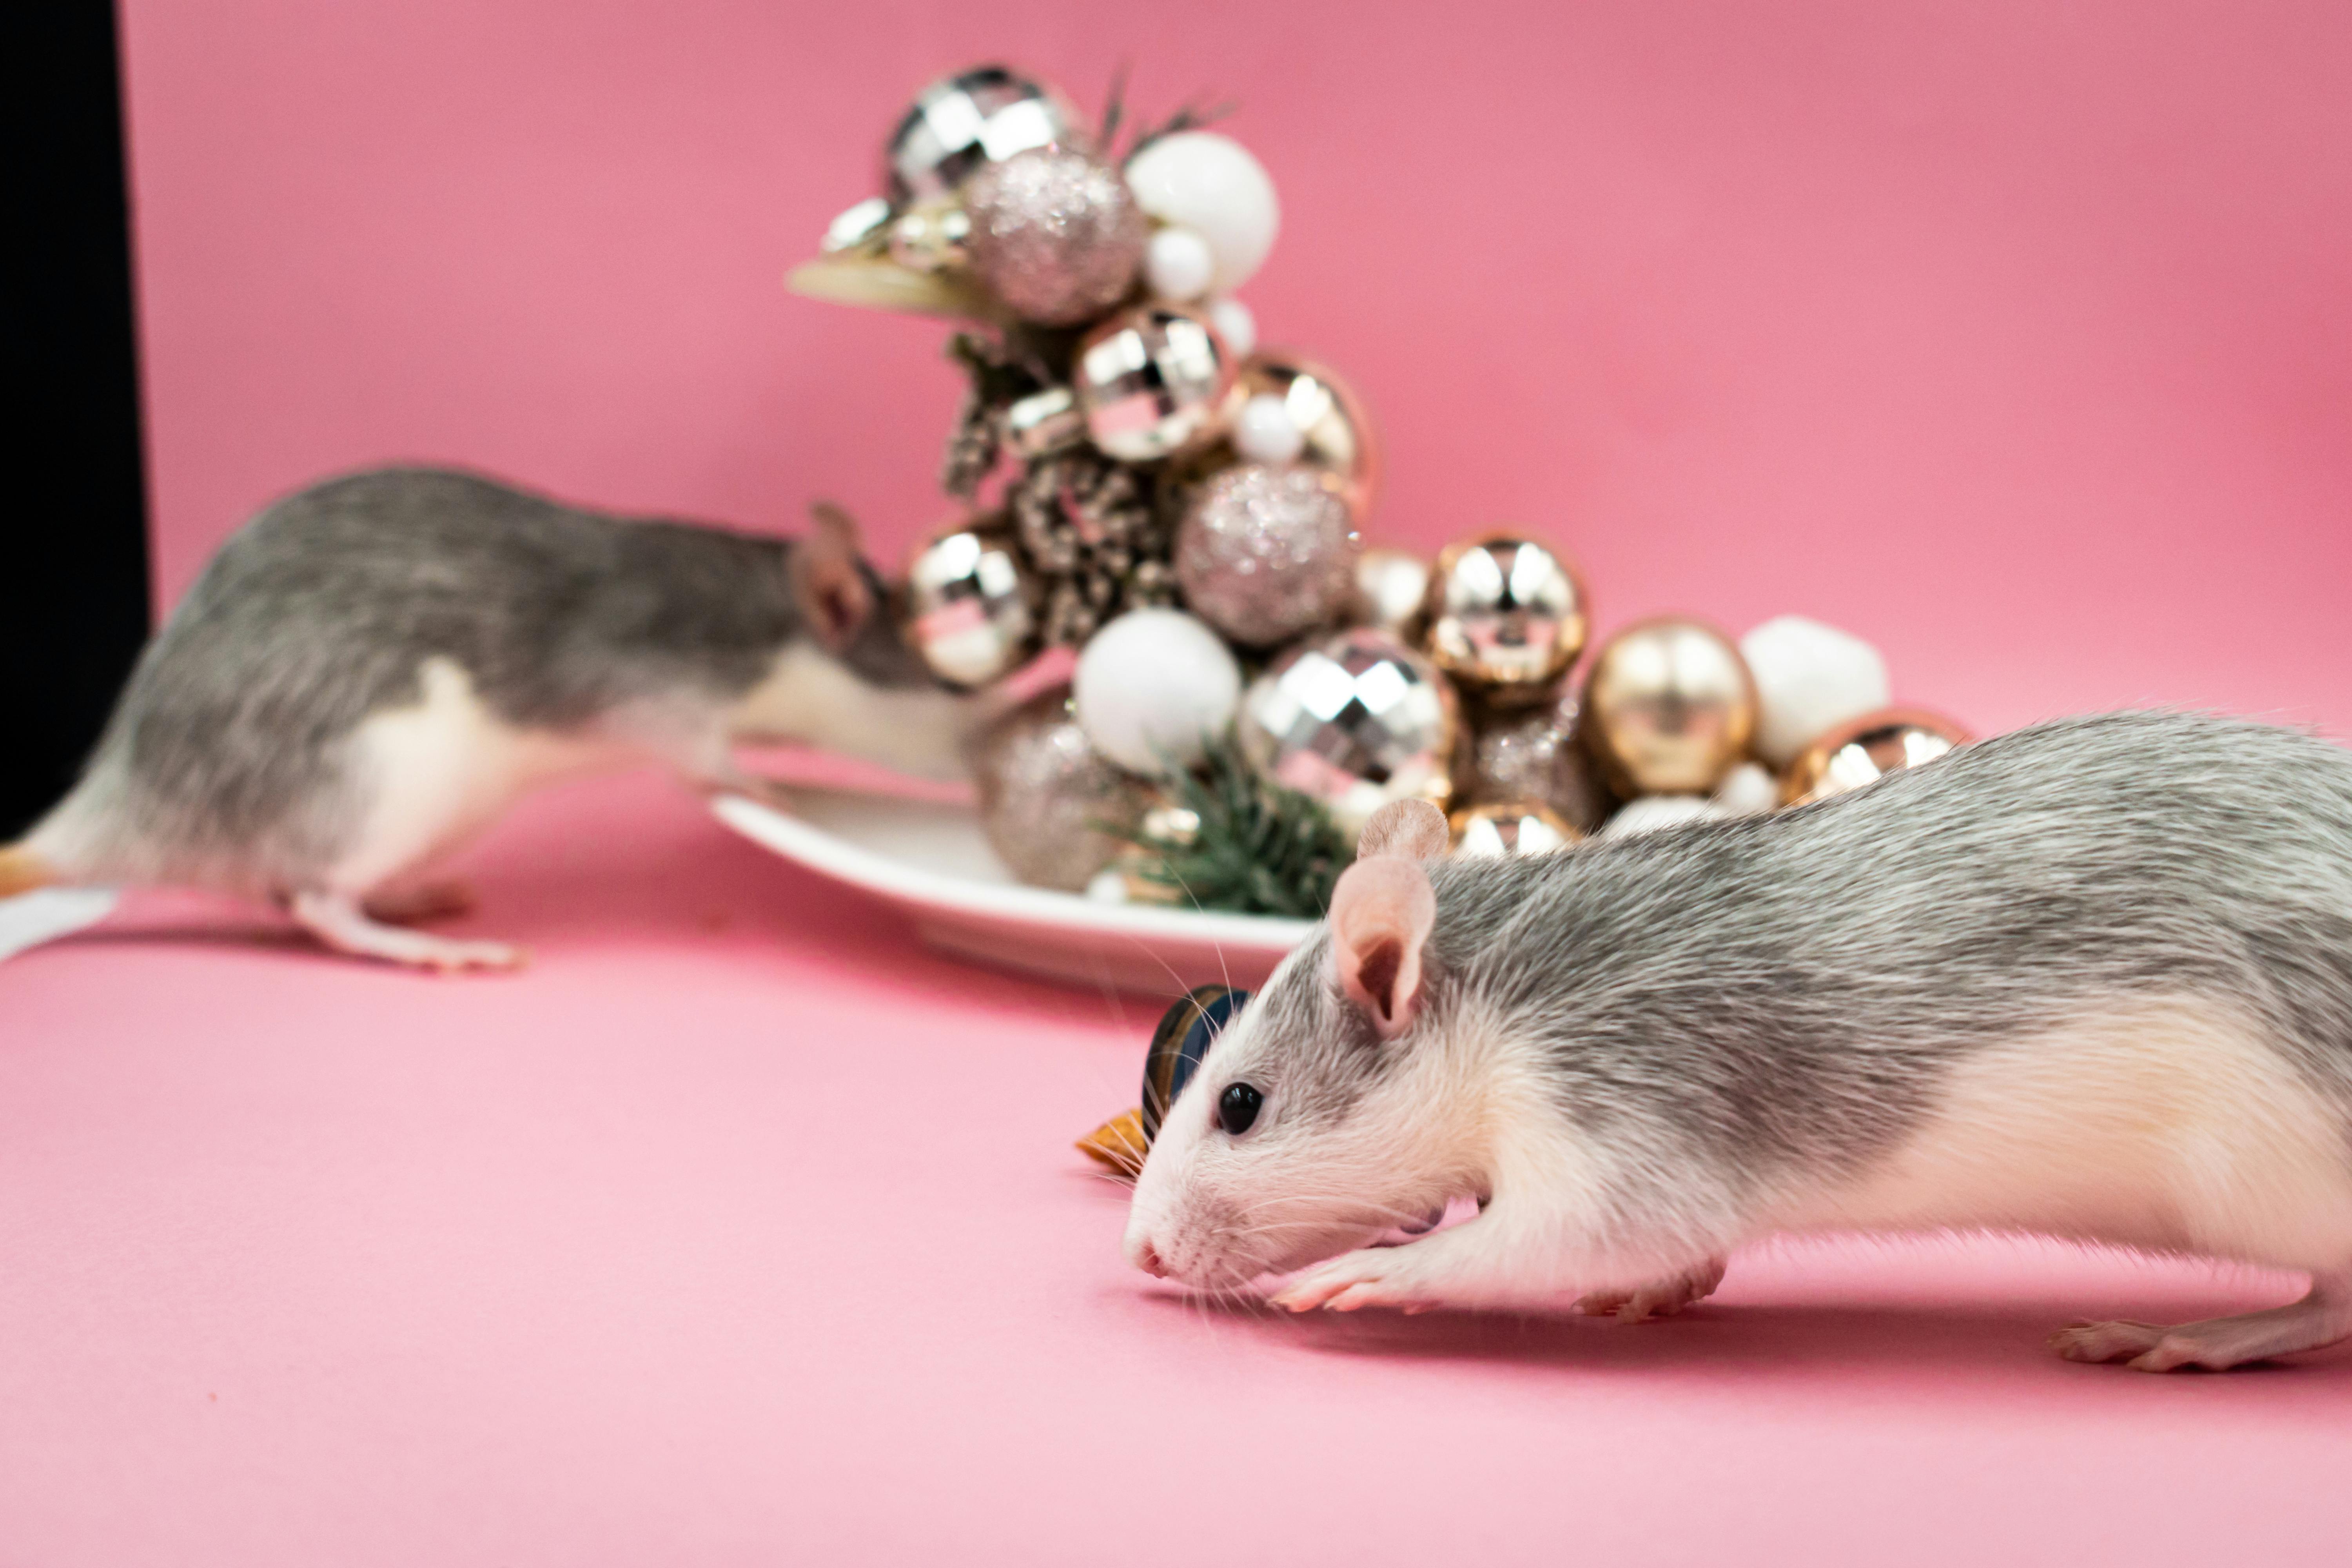 100+ Ratten Bilder und Fotos · Kostenlos Downloaden · Pexels Stock-Fotos